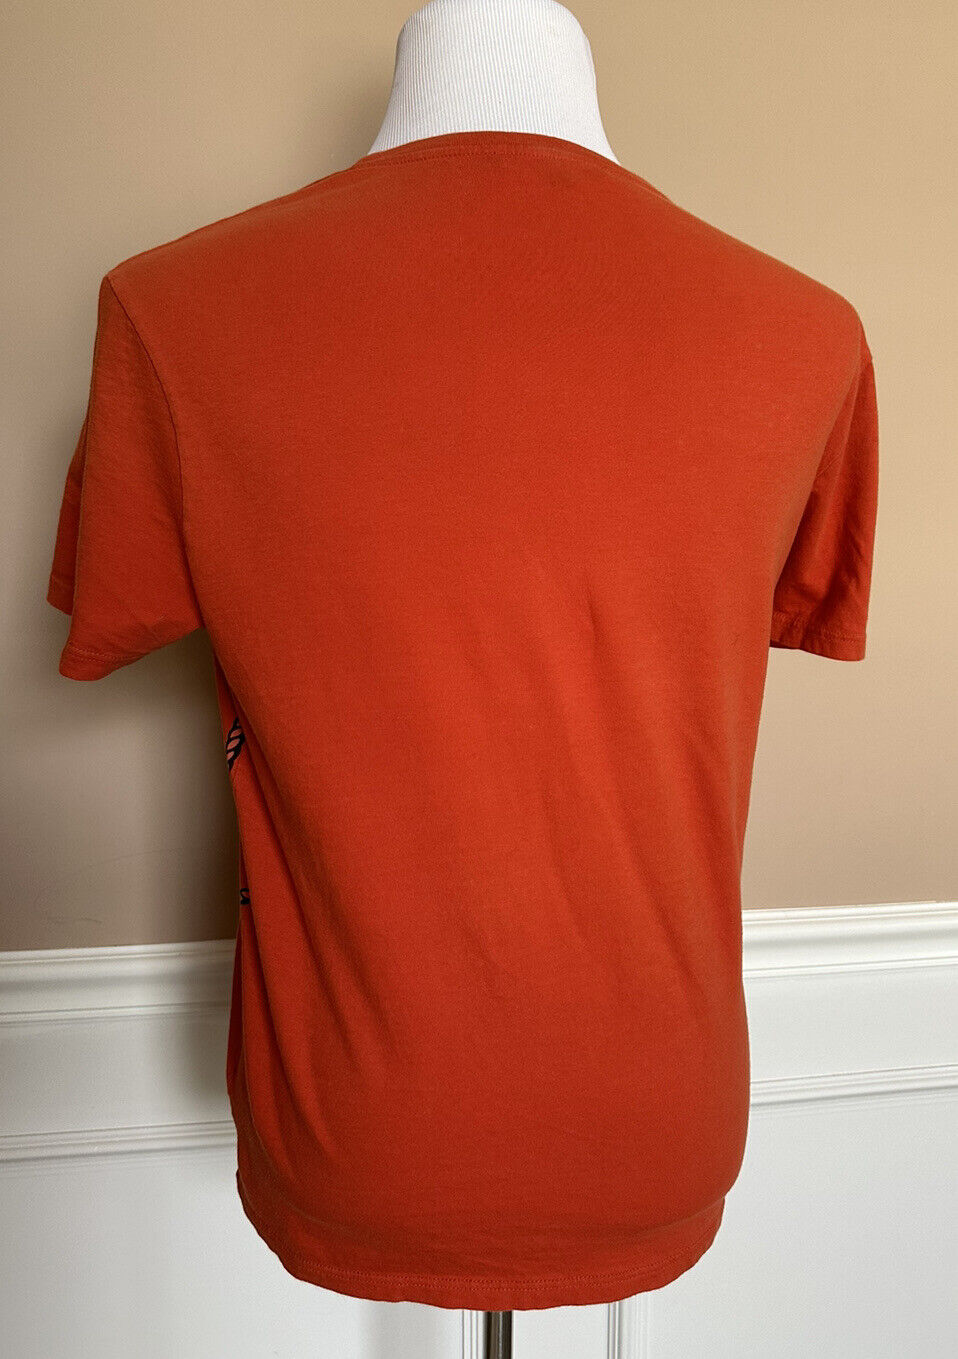 Gucci GG Print Orange Crew Neck Short Sleeve T-Shirt Medium